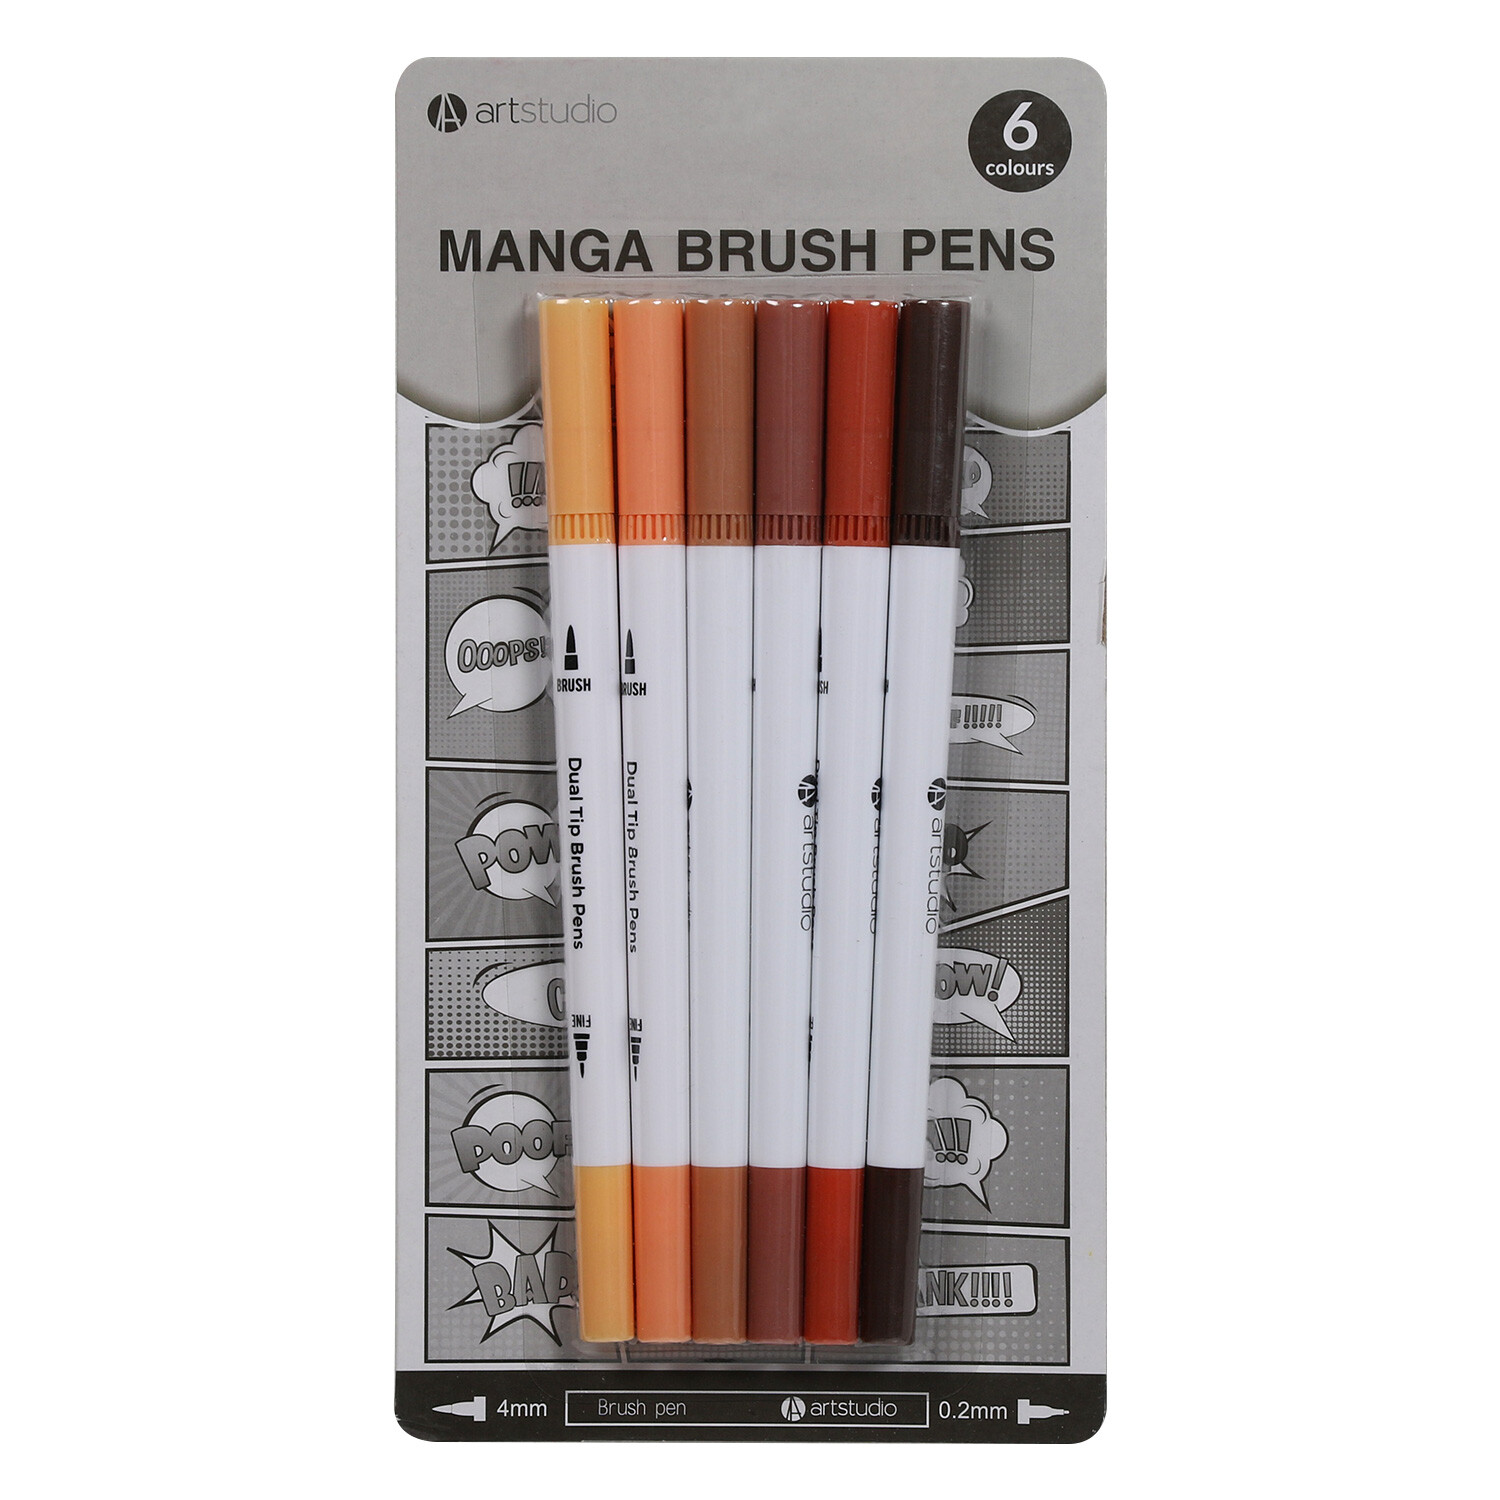 Art Studio Manga Brush Pens Image 2